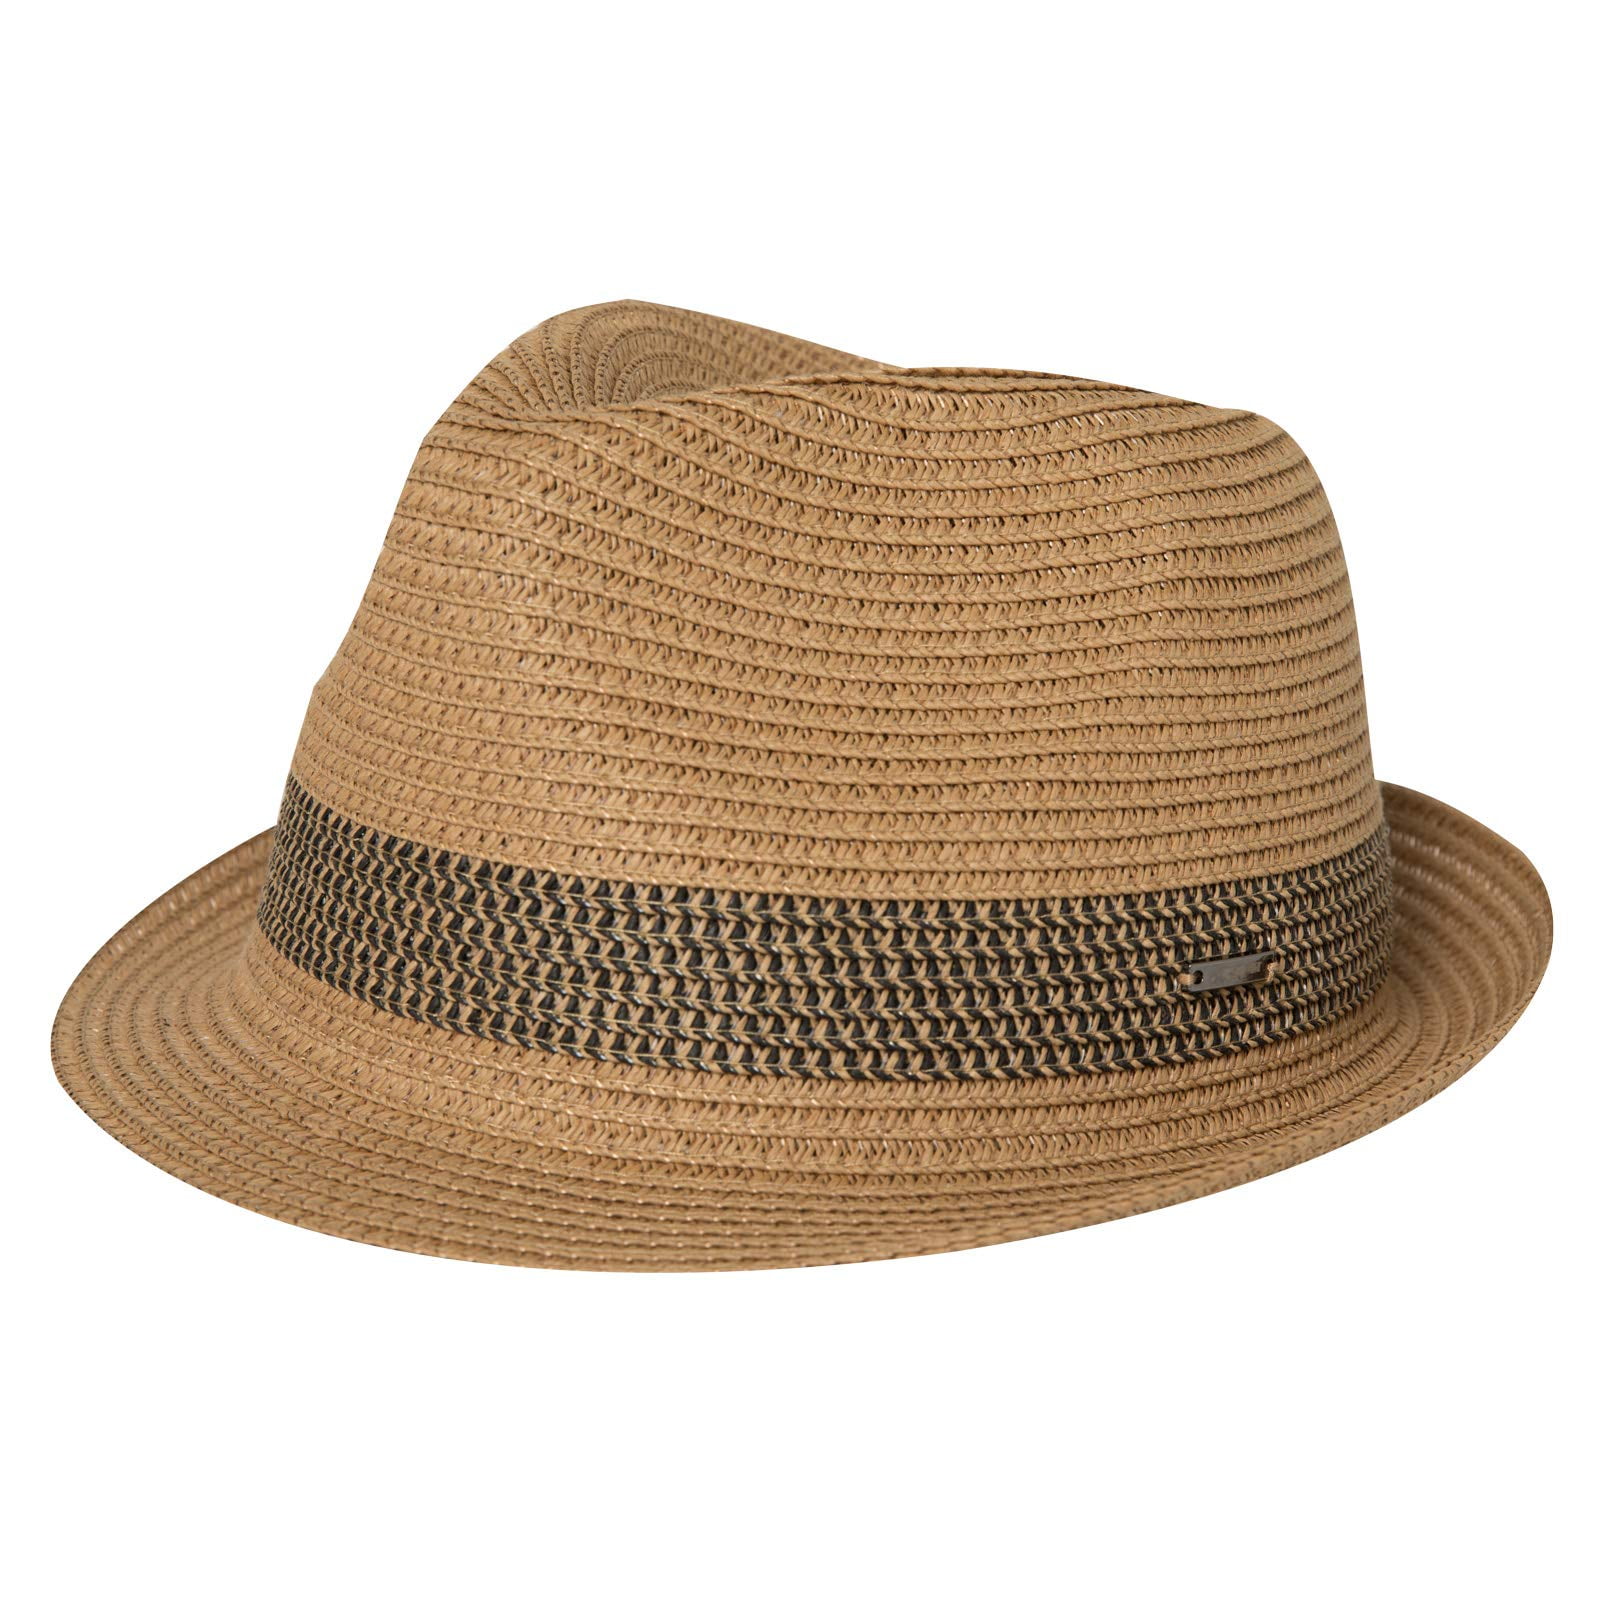 Men Women Summer Woven Straw Trilby Fedora Hat in Ivory Tan Black